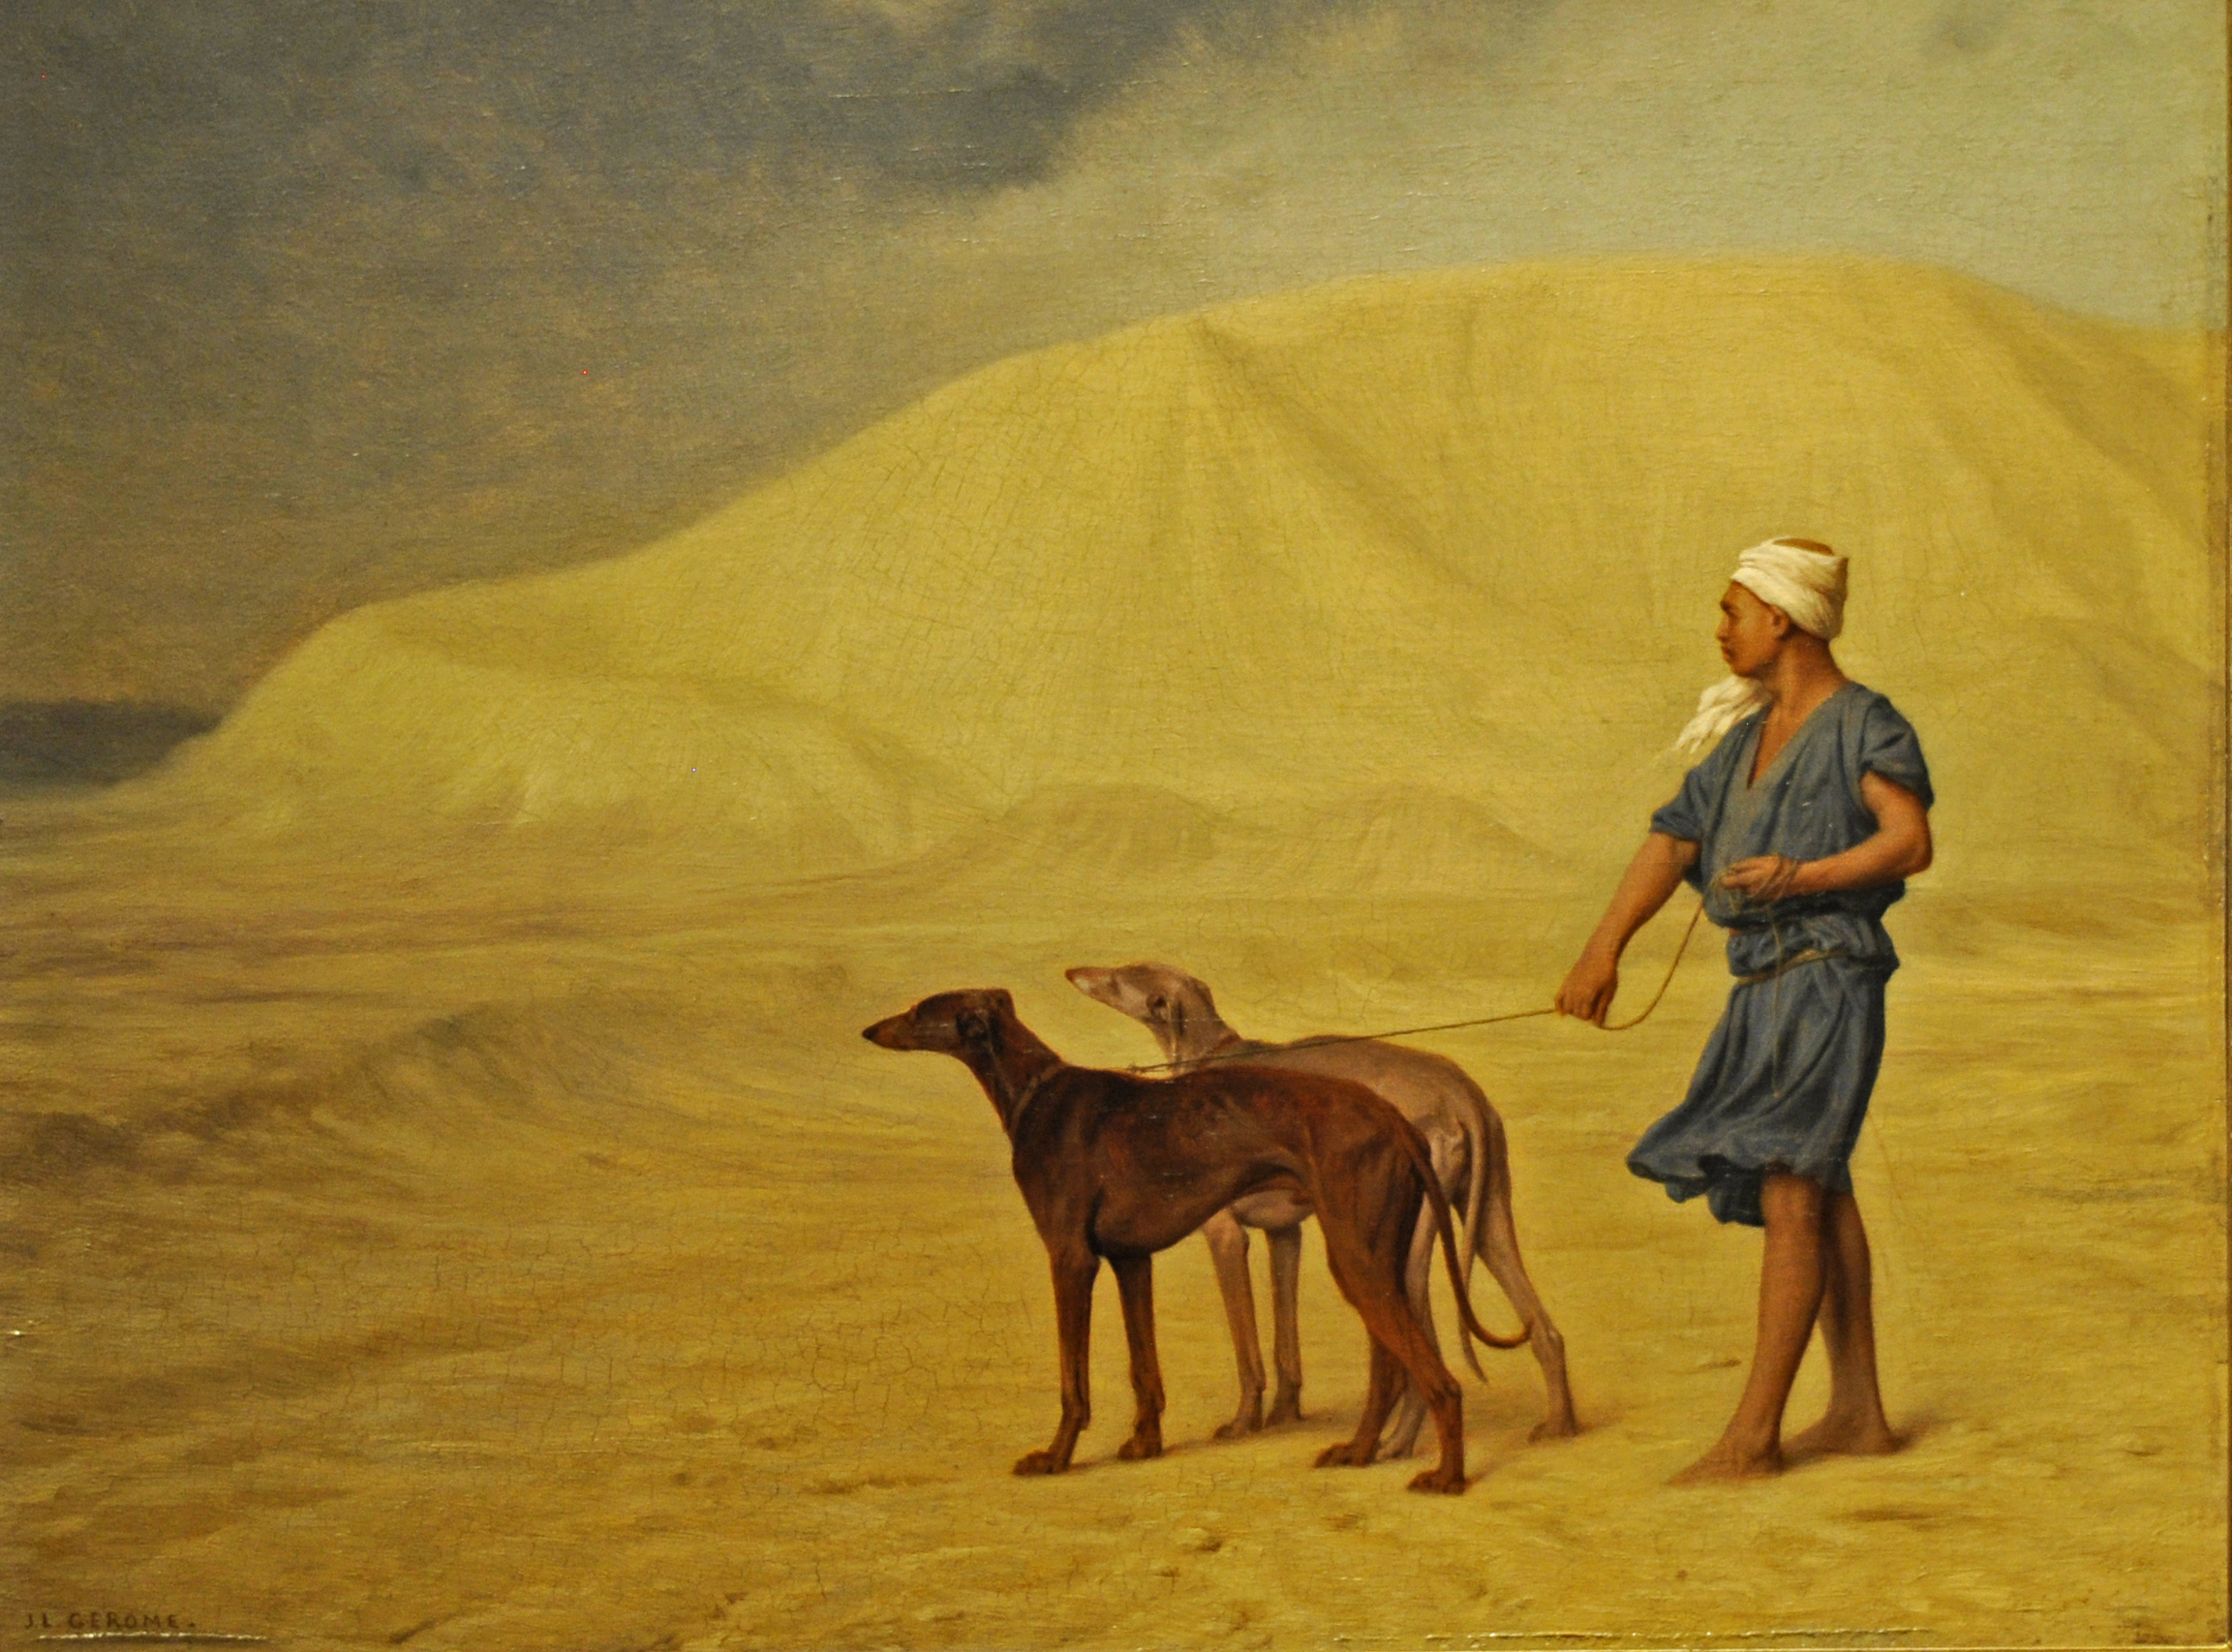 On the Desert by Jean-Léon Gérôme - 1867 - 21 x 26.8 cm Walters Art Museum